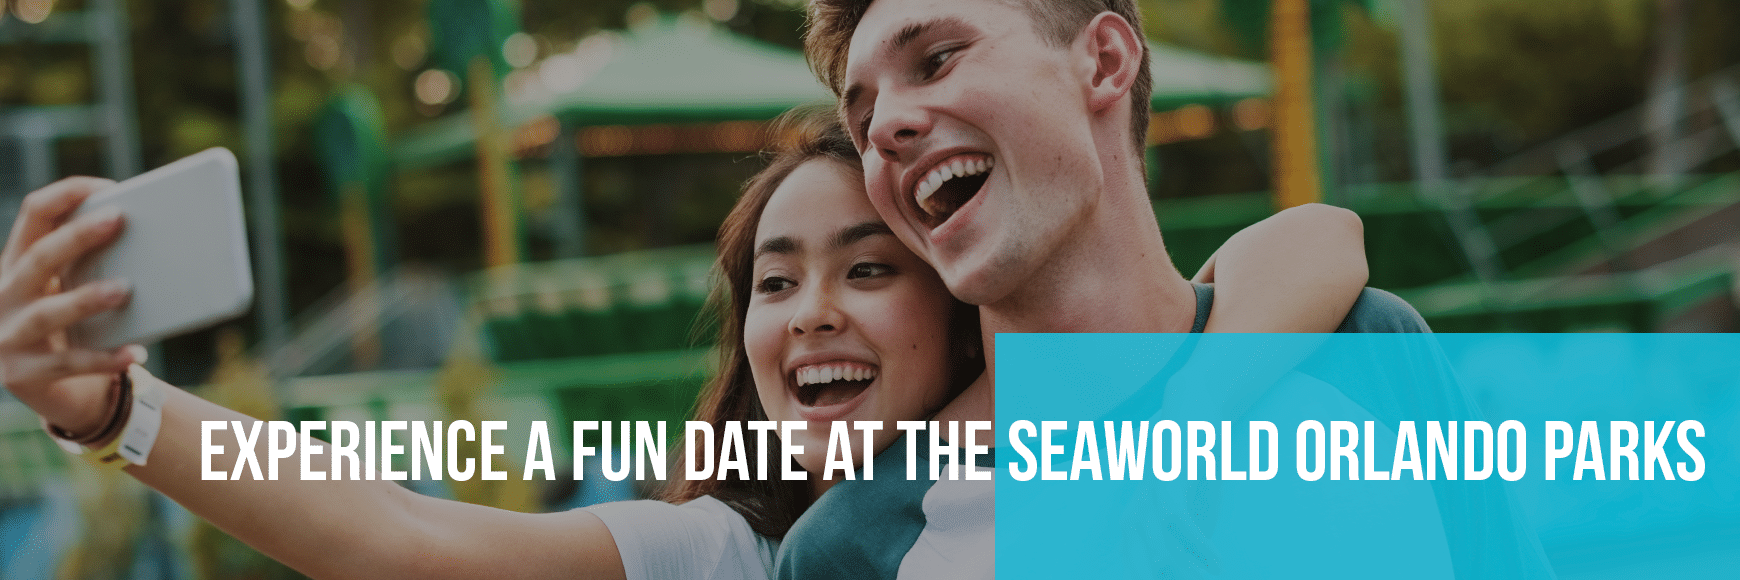 Fun Date Blog - SeaWorld Orlando